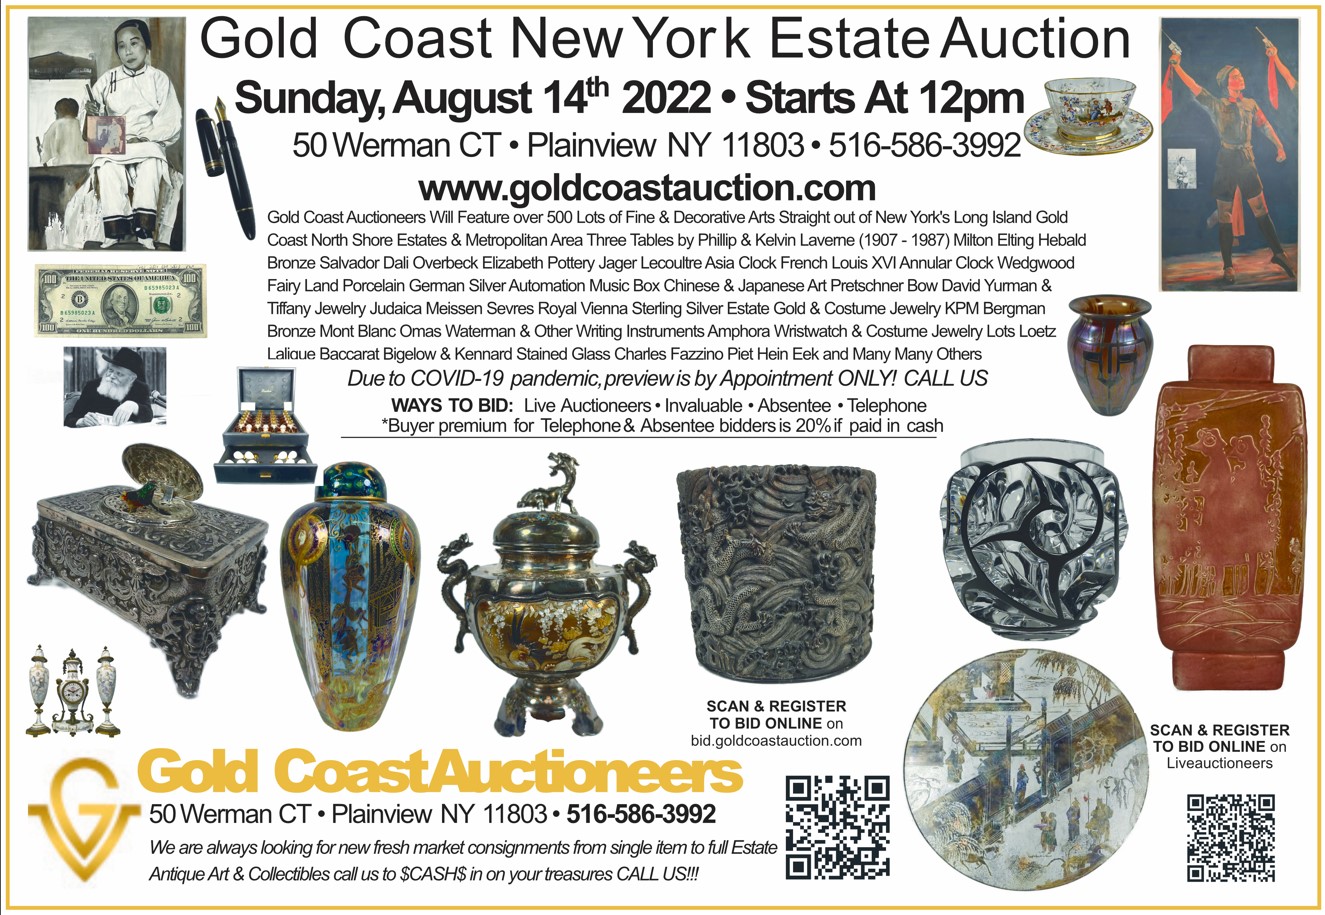 travel auctions gold coast